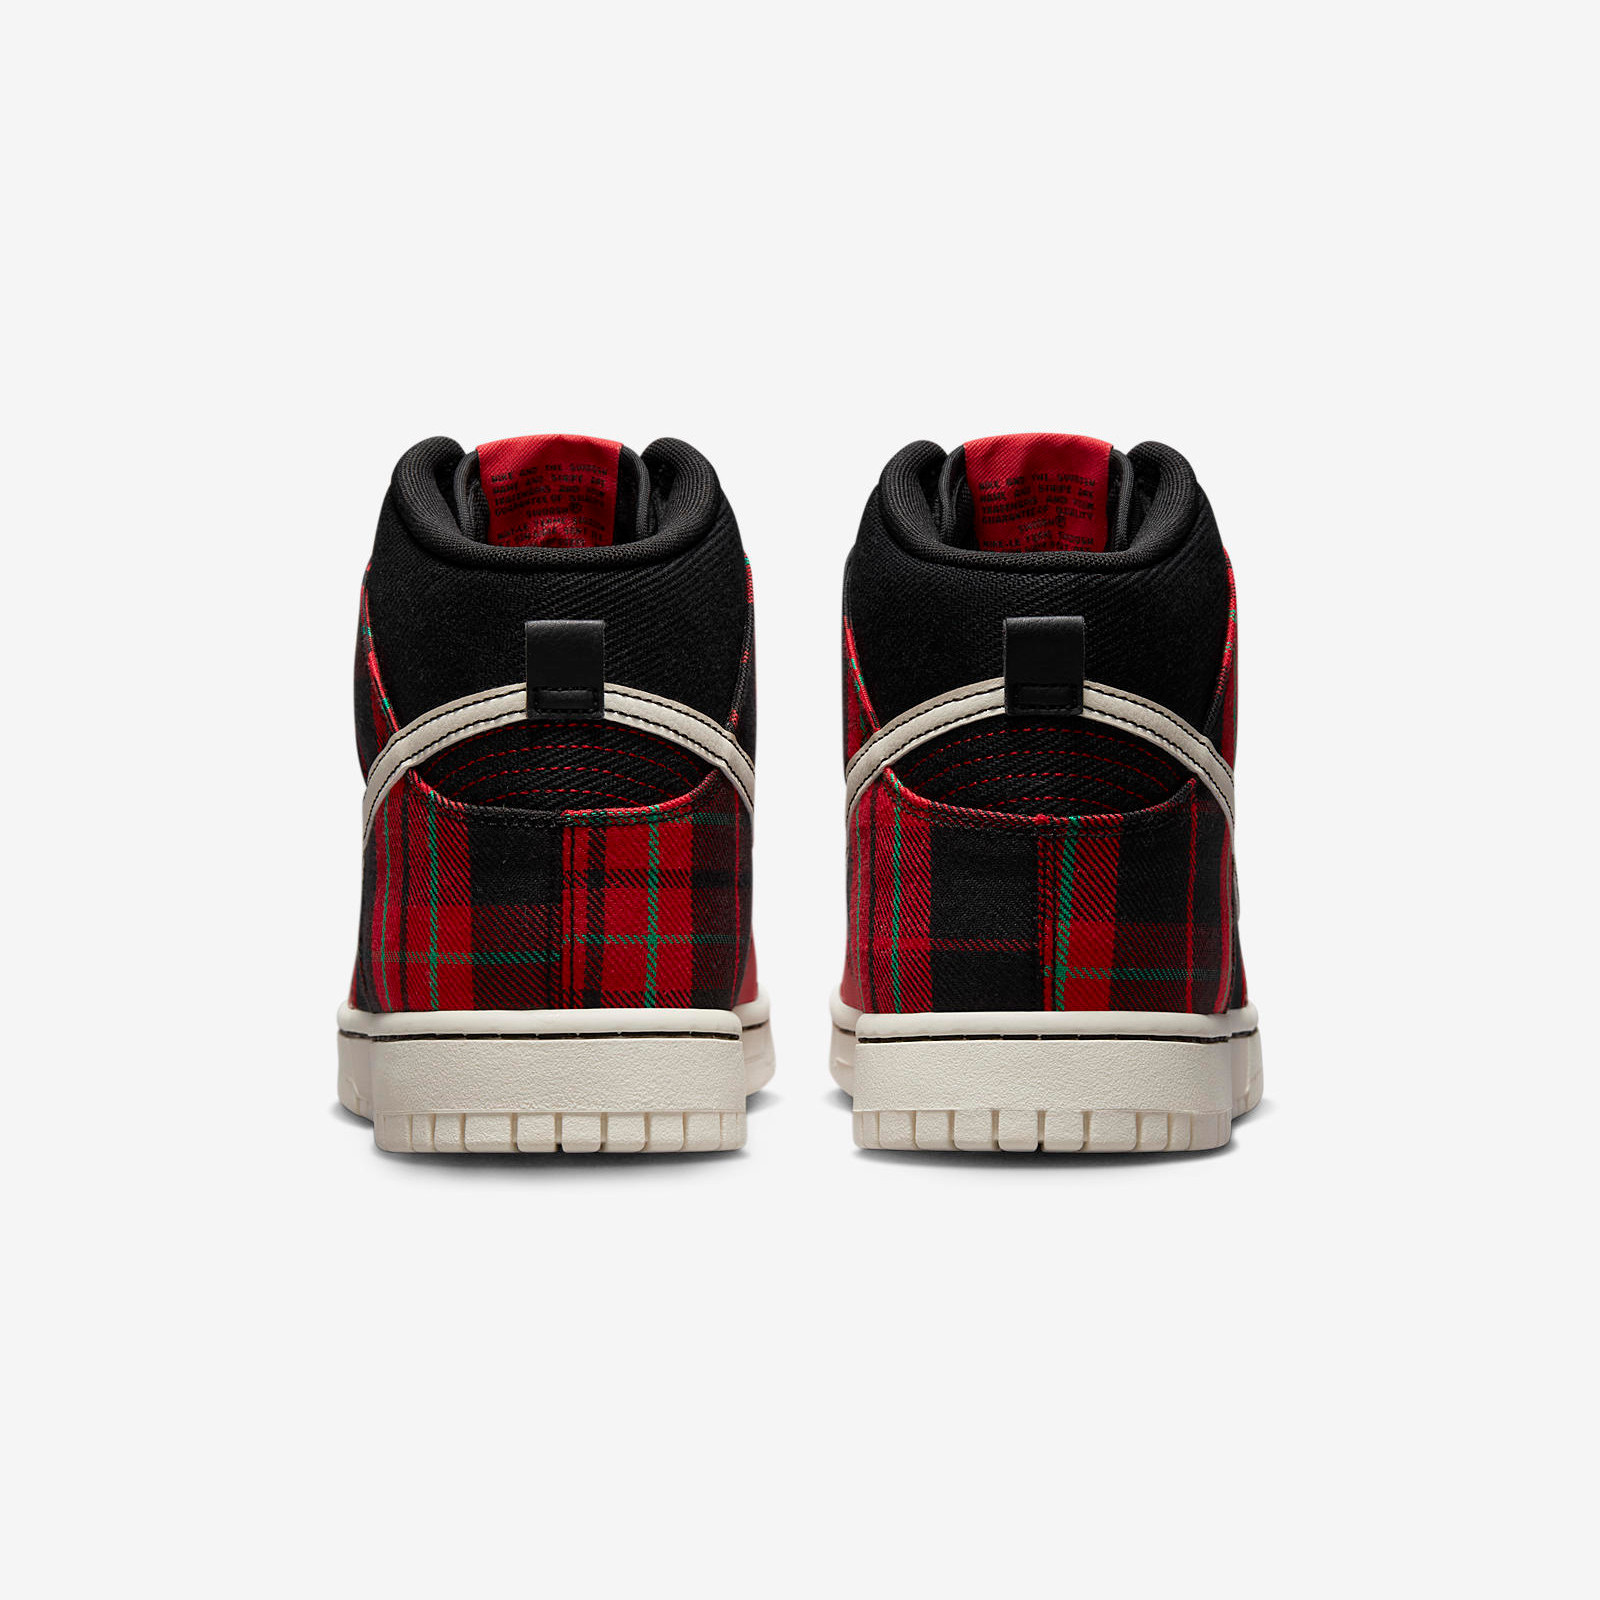 Nike Dunk High Plaid
Black / Red